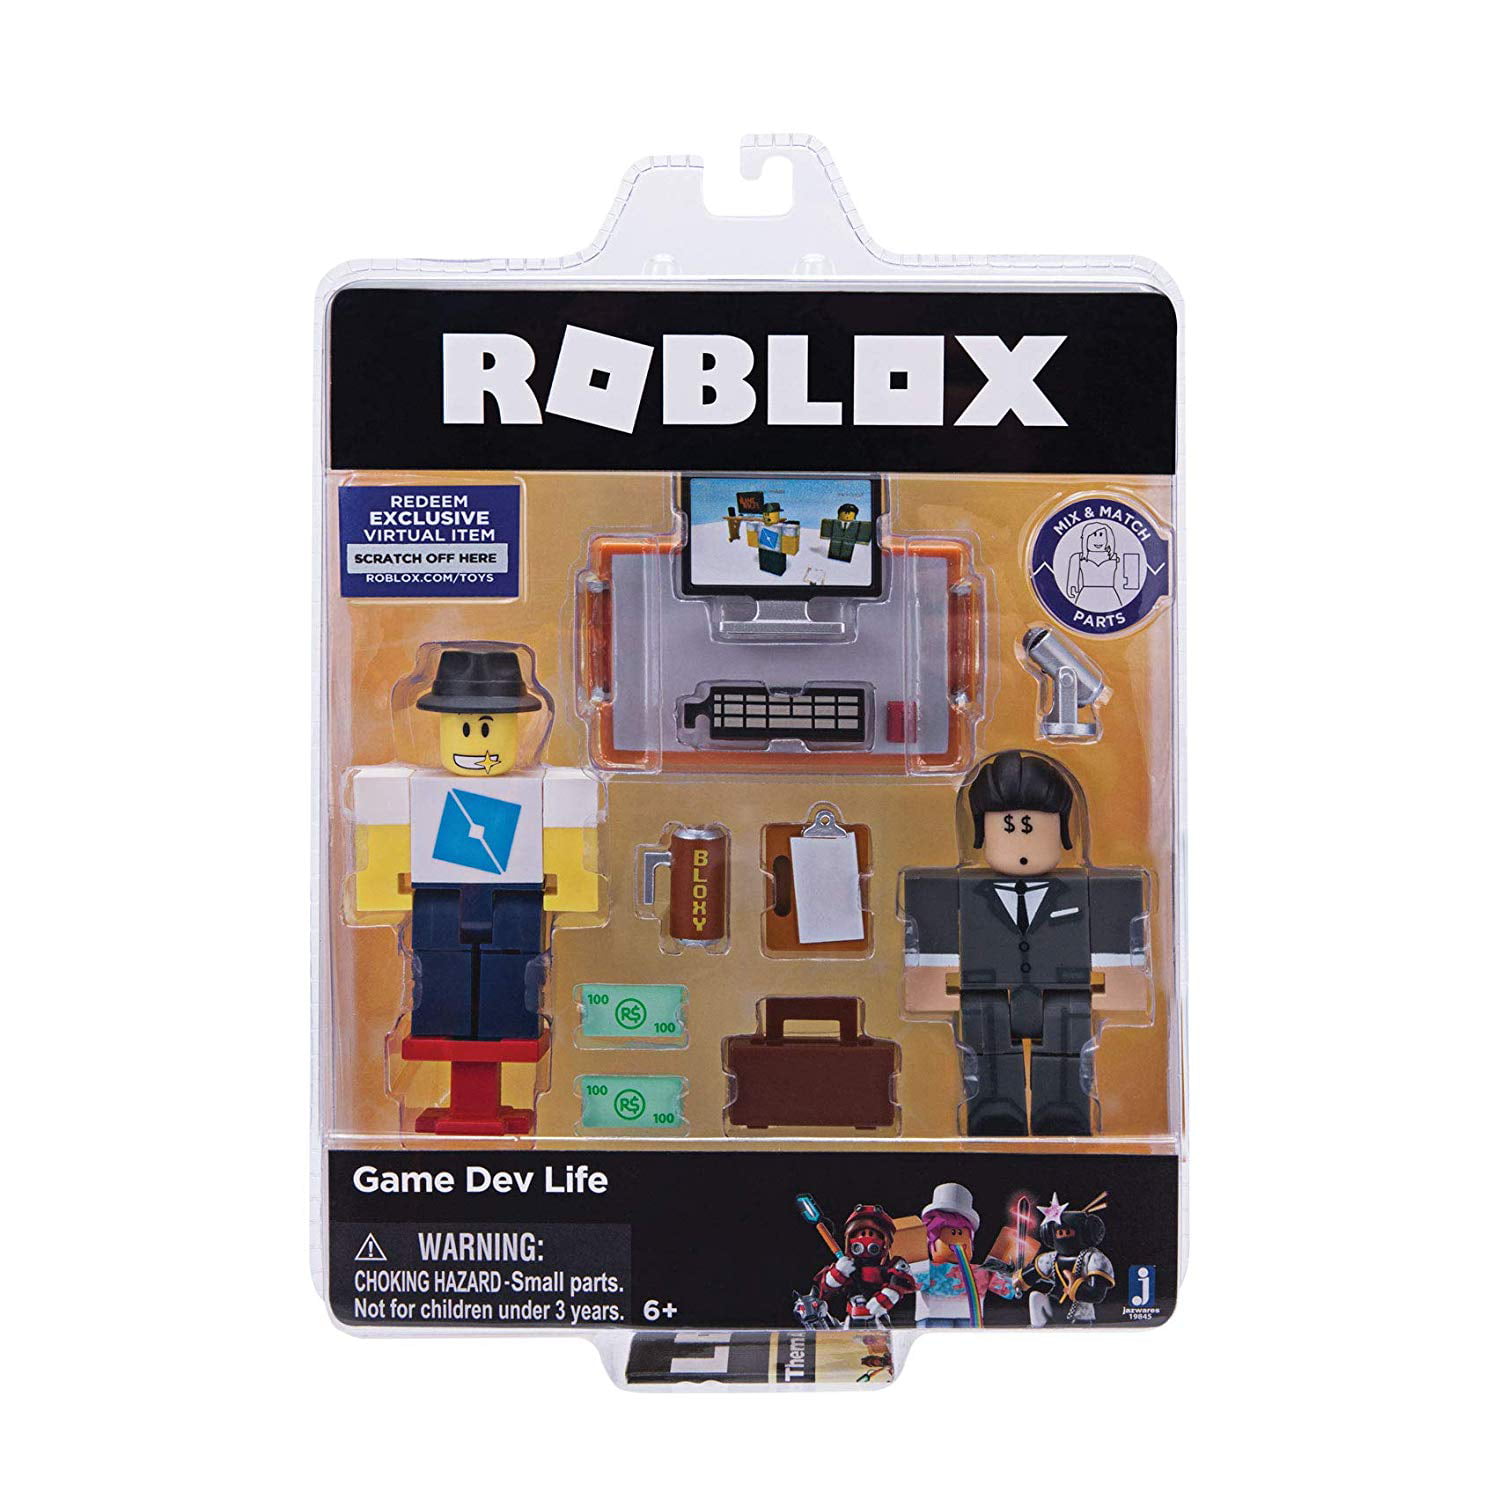 Roblox Celebrity Game Developer Life Game Pack Toy Set Walmart